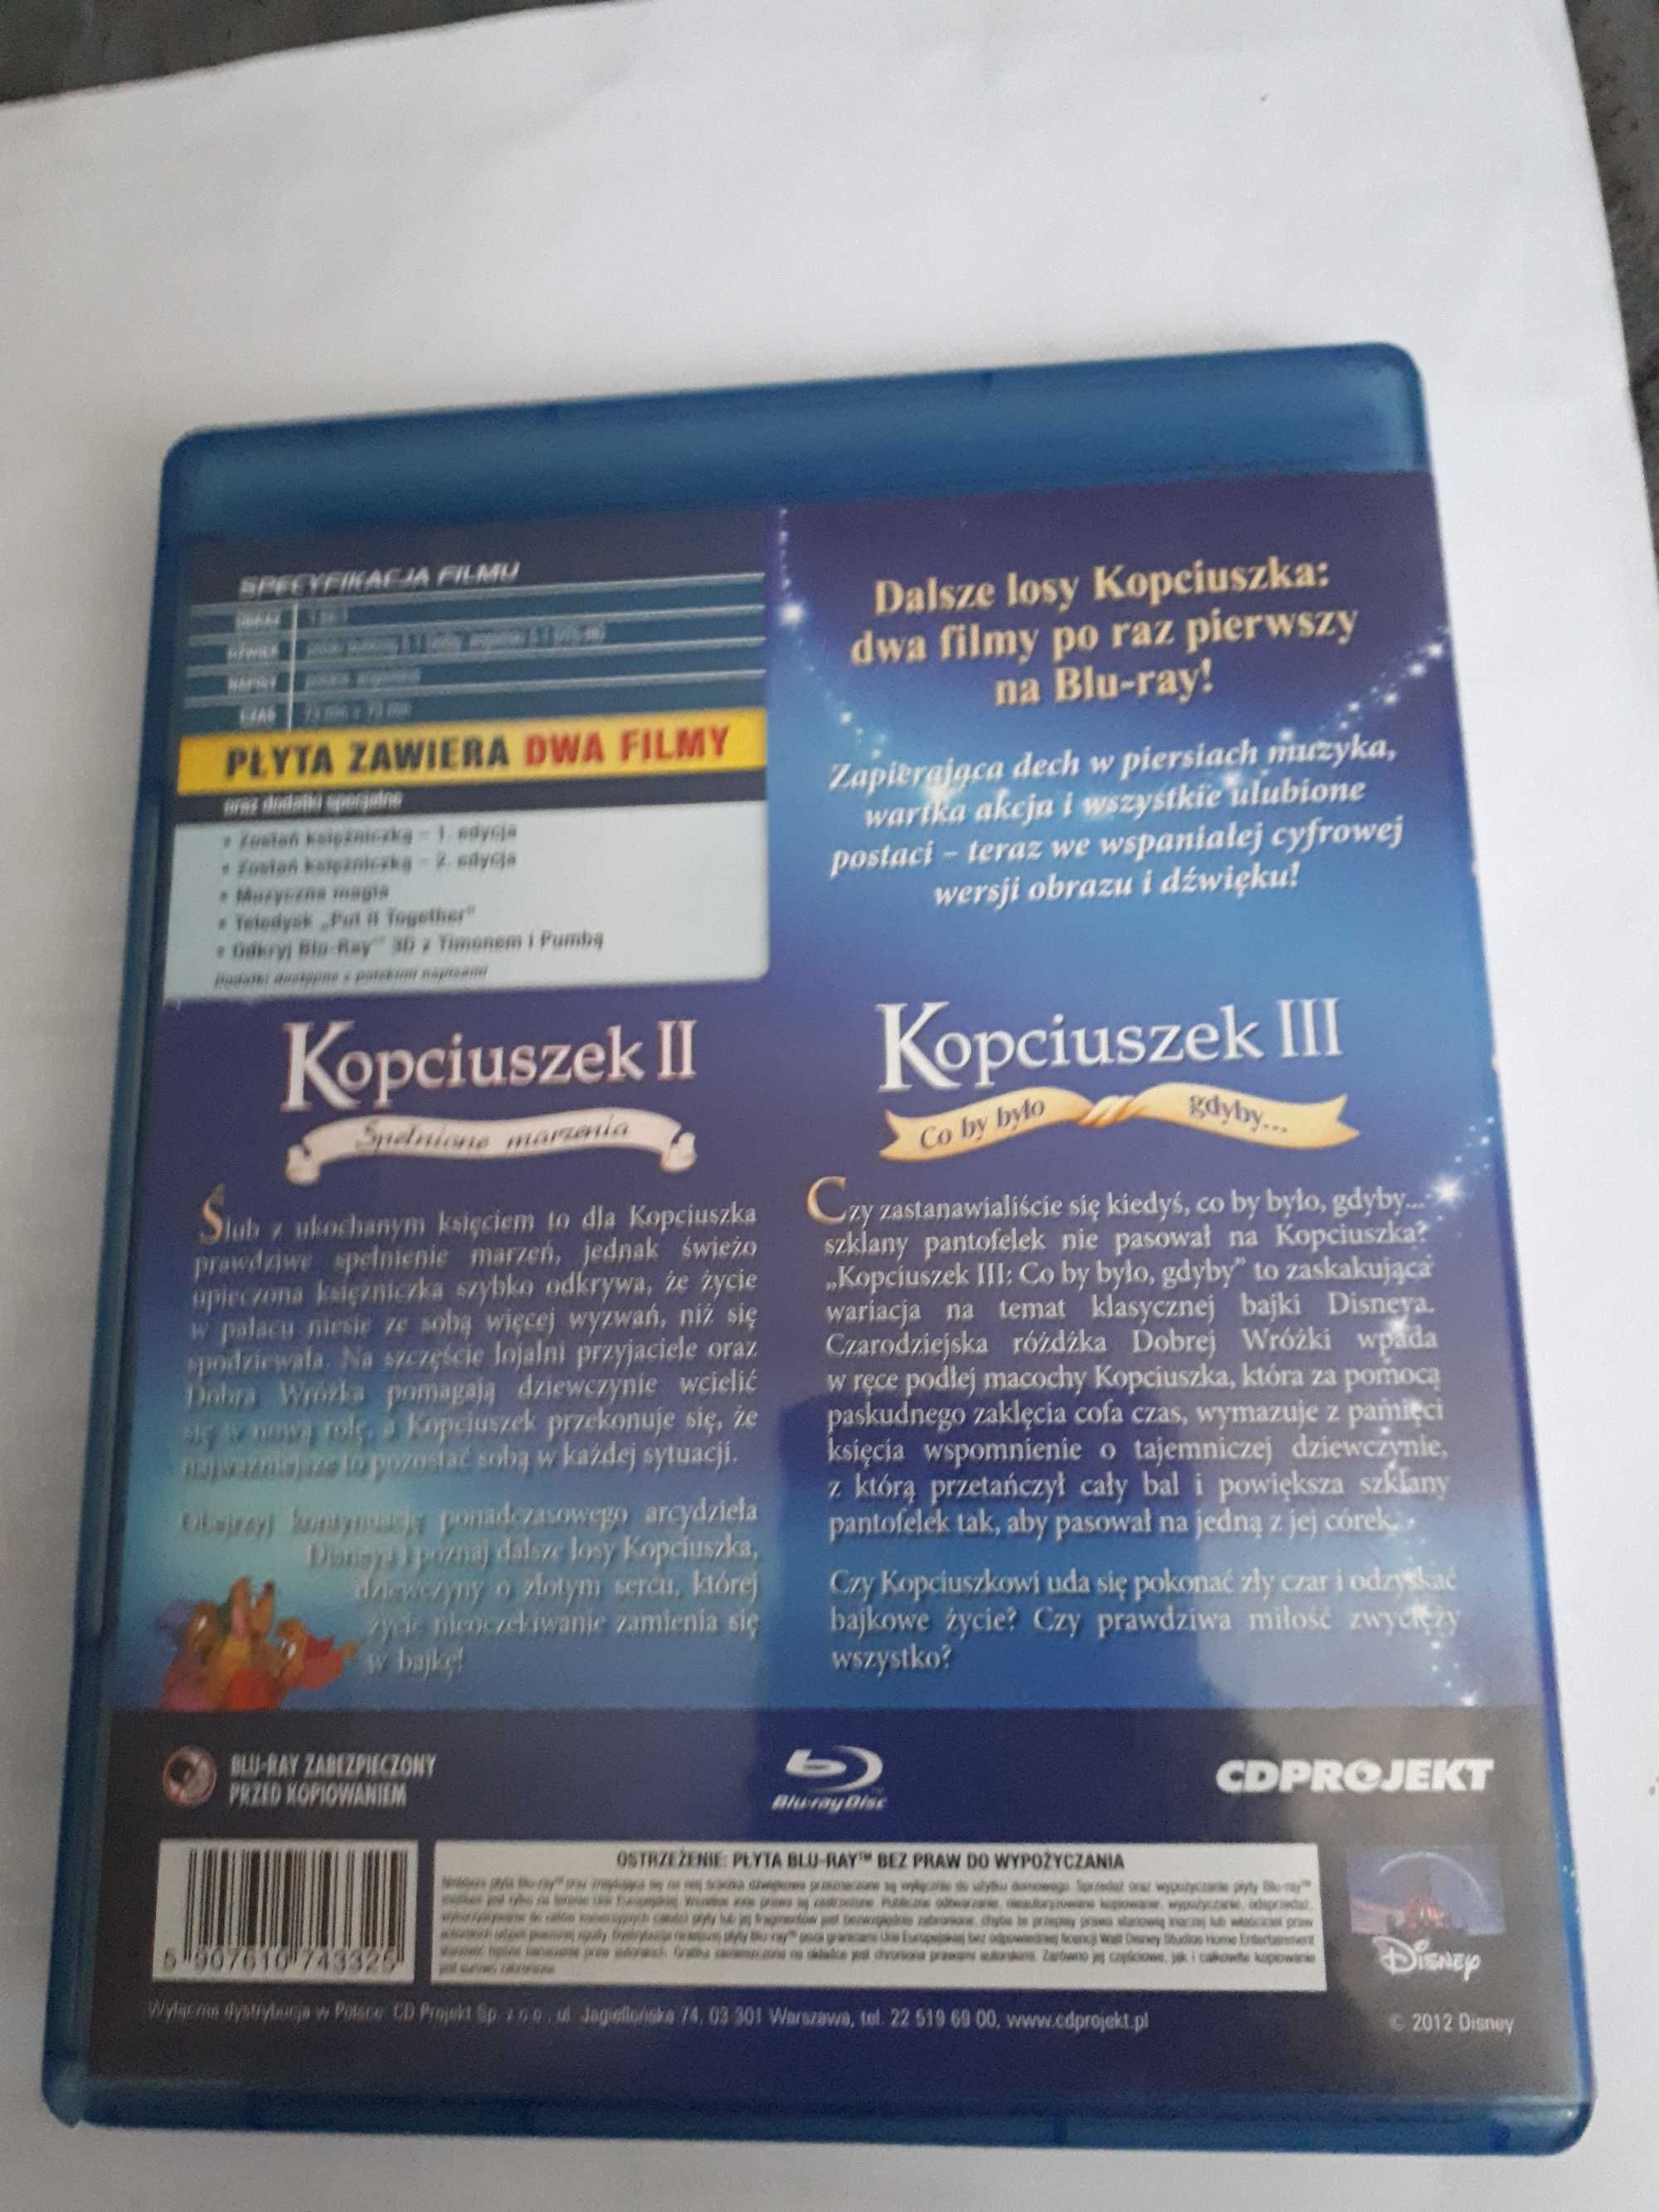 Kopciuszek II / Kopciuszek III płyta Blu-ray